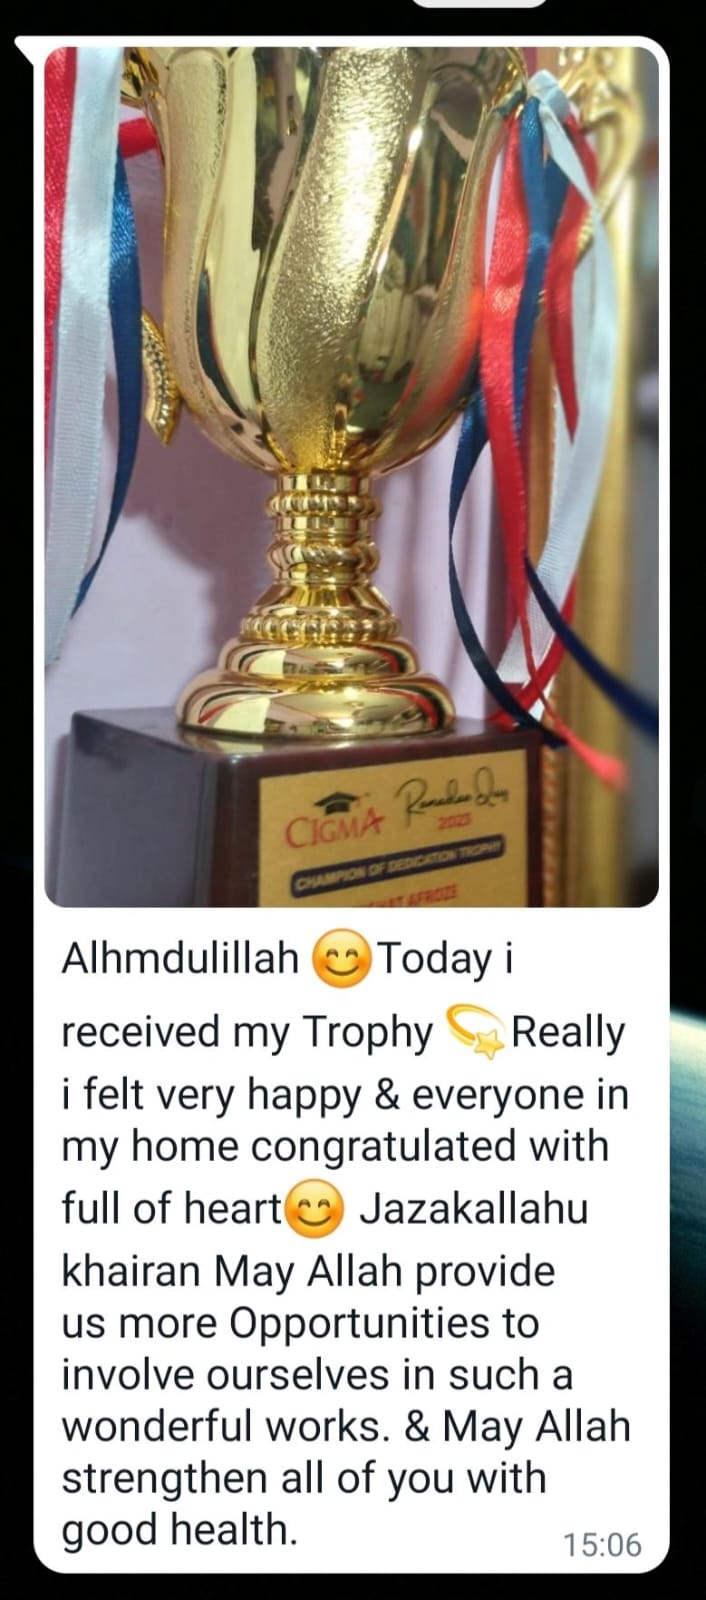 CIGMA-Ramadan-Quiz-Participants-Feedback-04-Winner-Champion-of-Dedication-Trophy-for-her-100-Attendance.jpeg